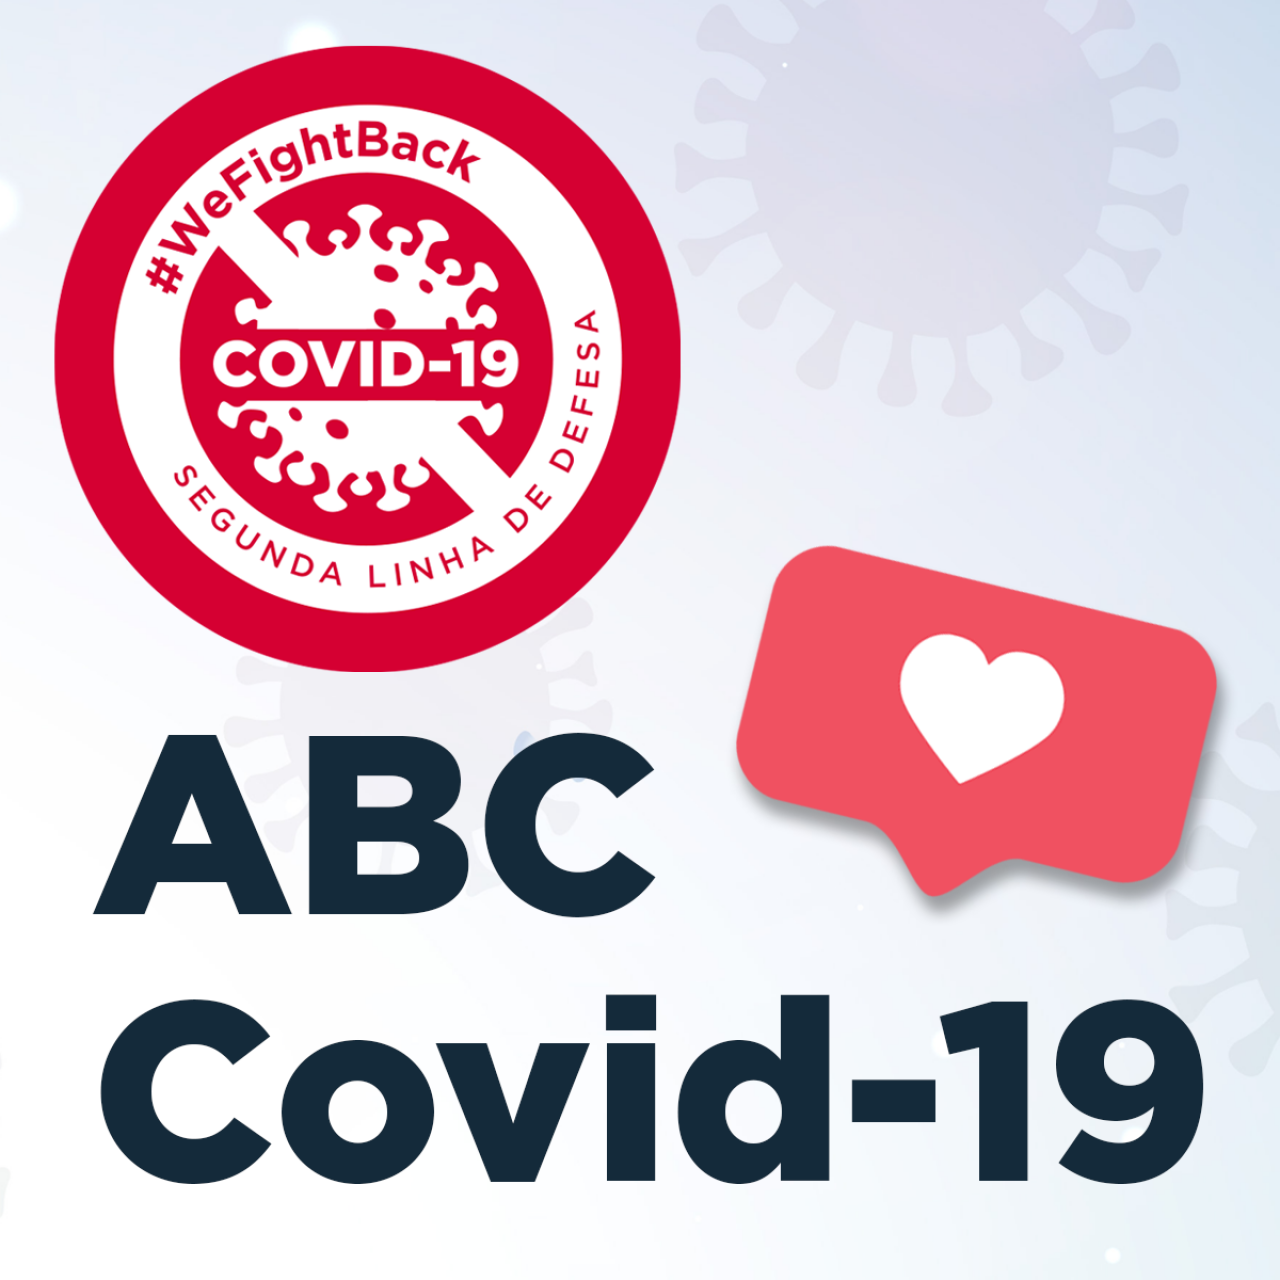 ABC Covid-19 Redes Sociais